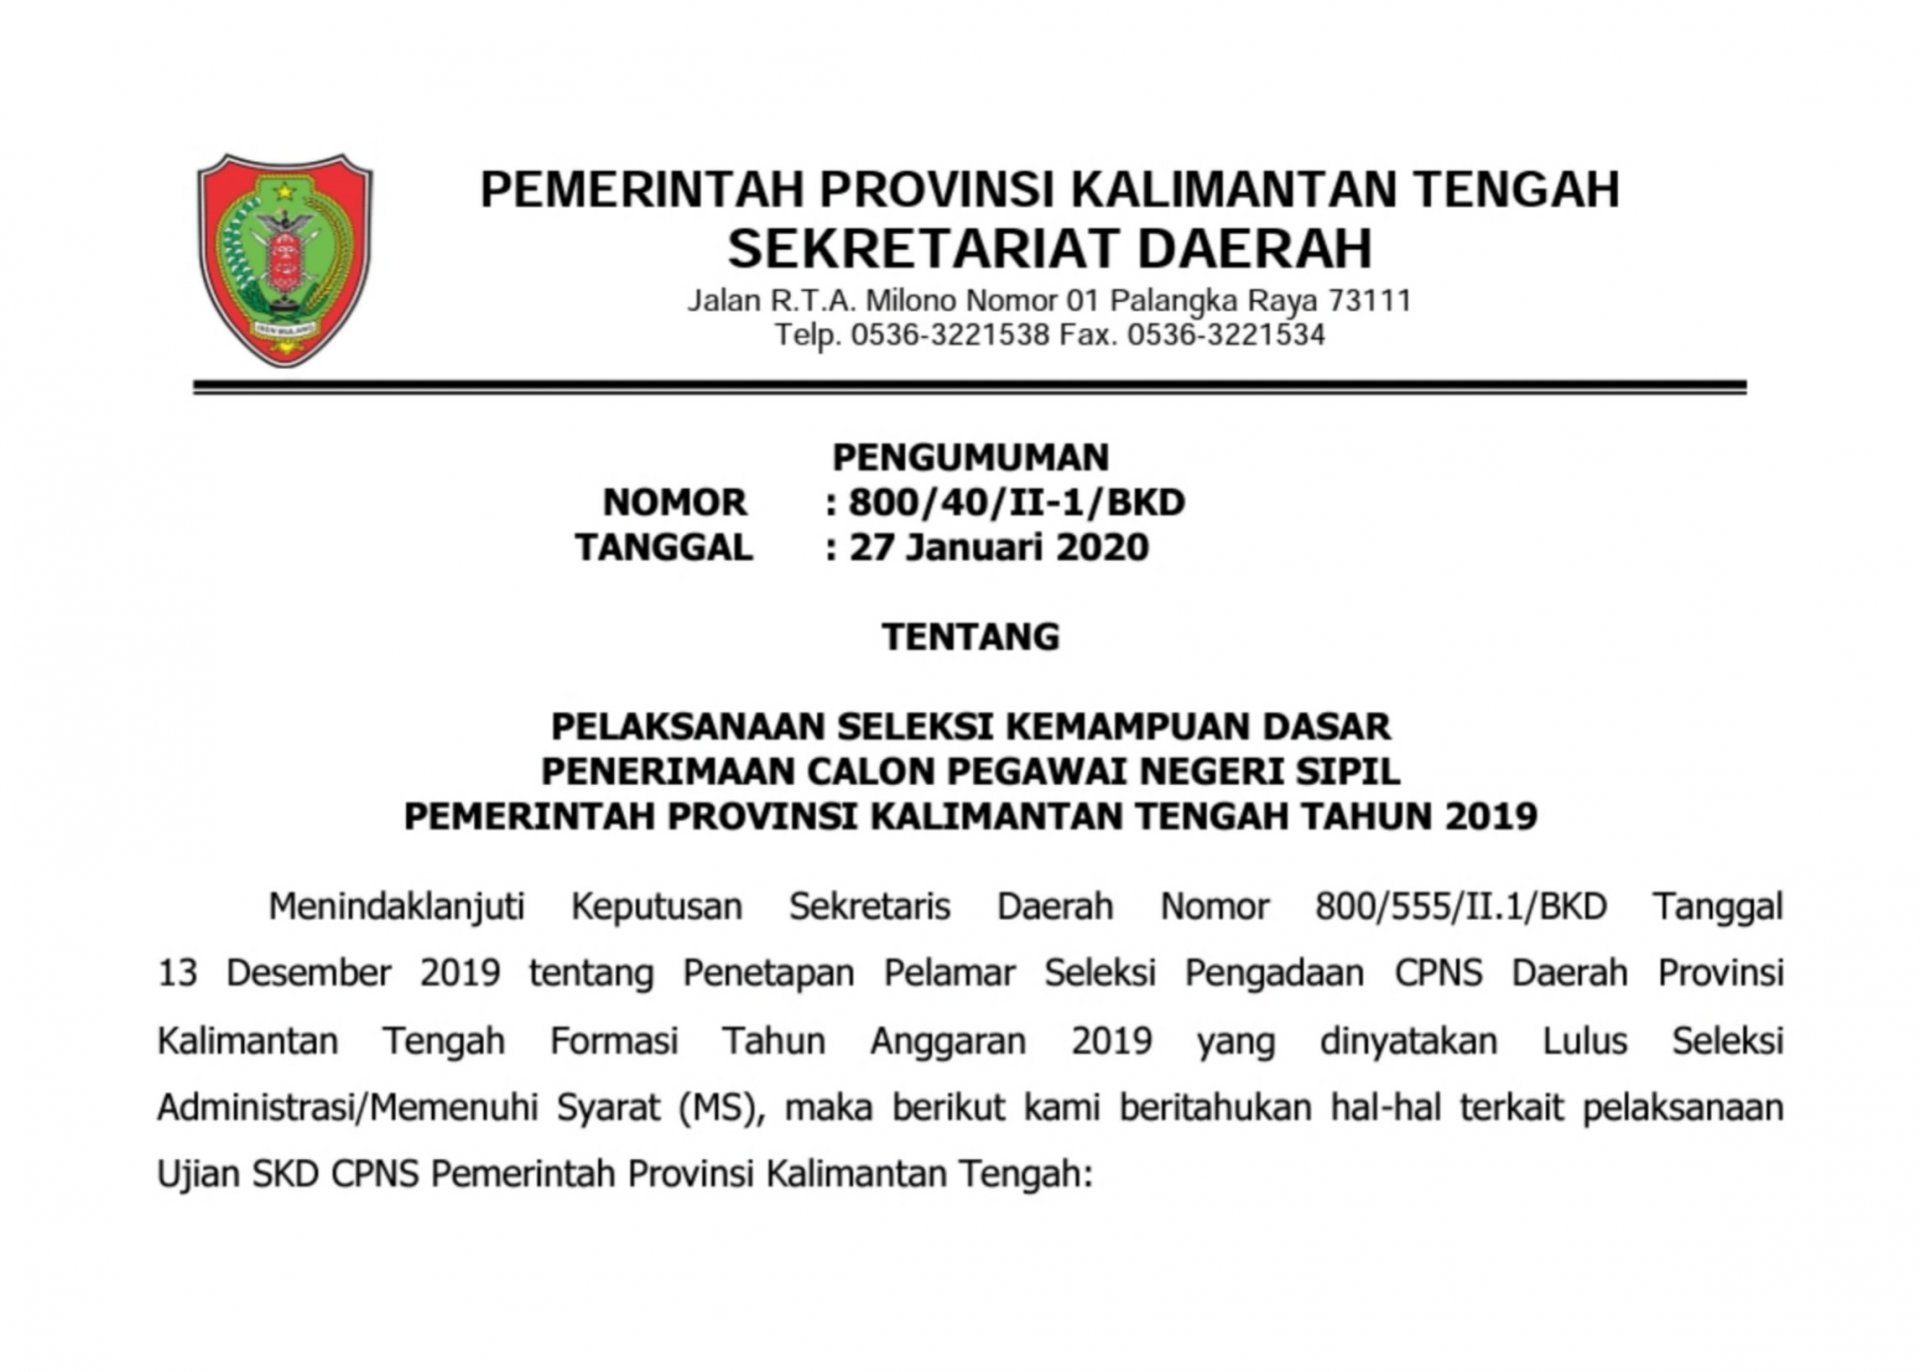 Pengumuman Jadwal Pelaksanaan Ujian SKD CPNS Pemprov Kalimantan Tengah